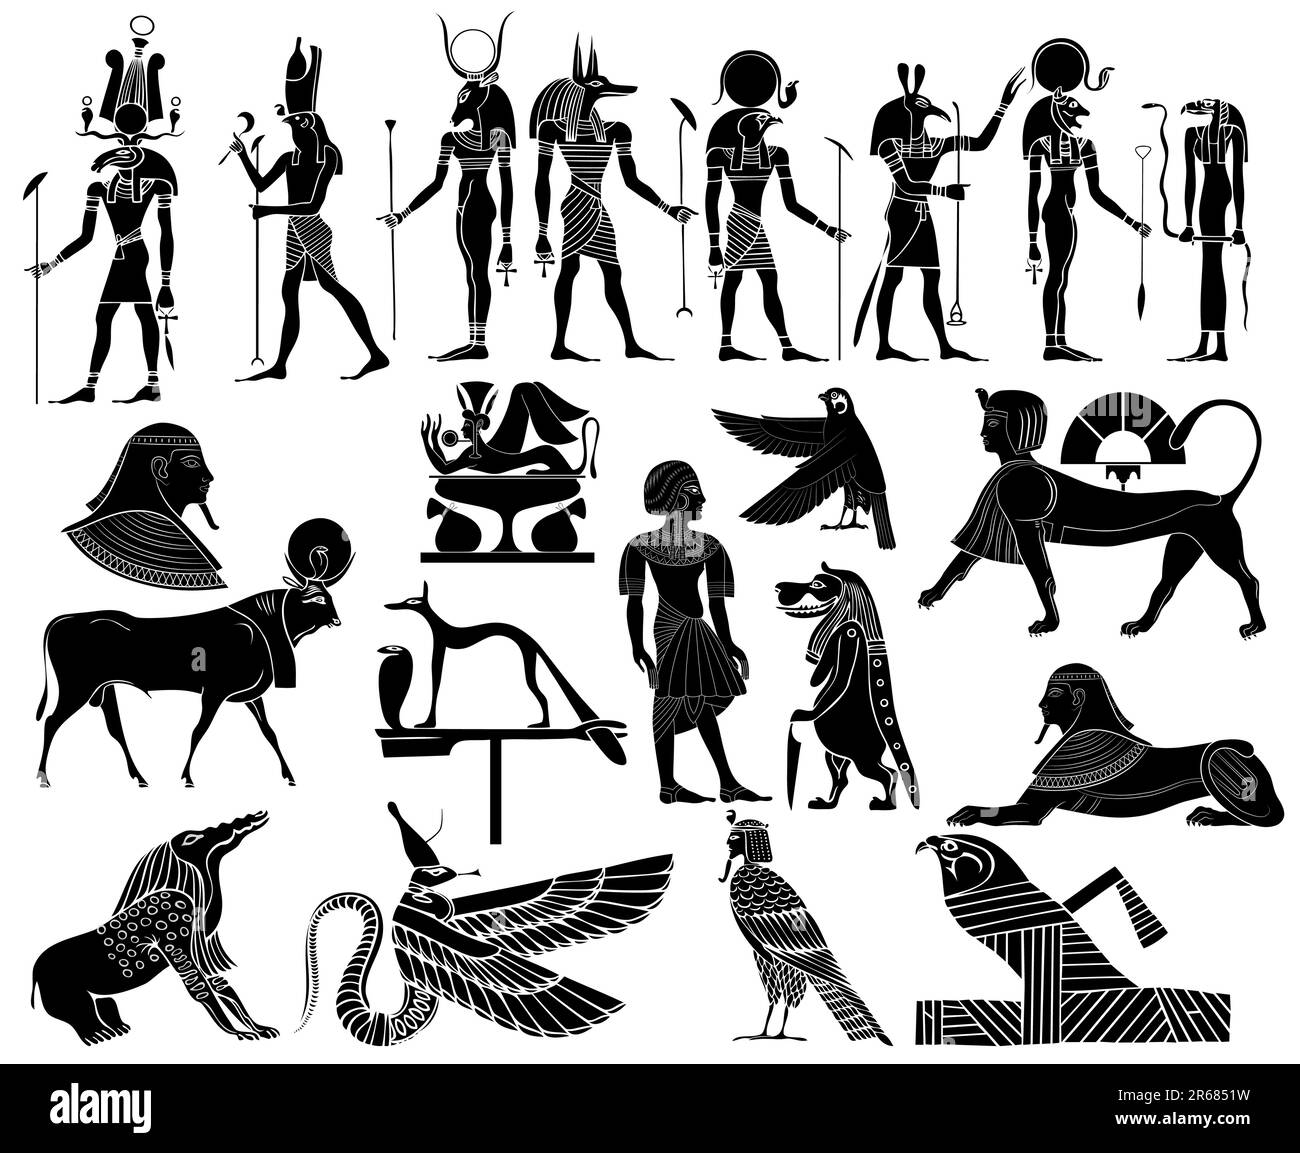 Vector - various themes of ancient Egypt:   Illustration of the gods and goddess of ancient Egypt - Ra, Anubis, Bastet, Hathor, Khensu, Hathor, Hor... Stock Vector